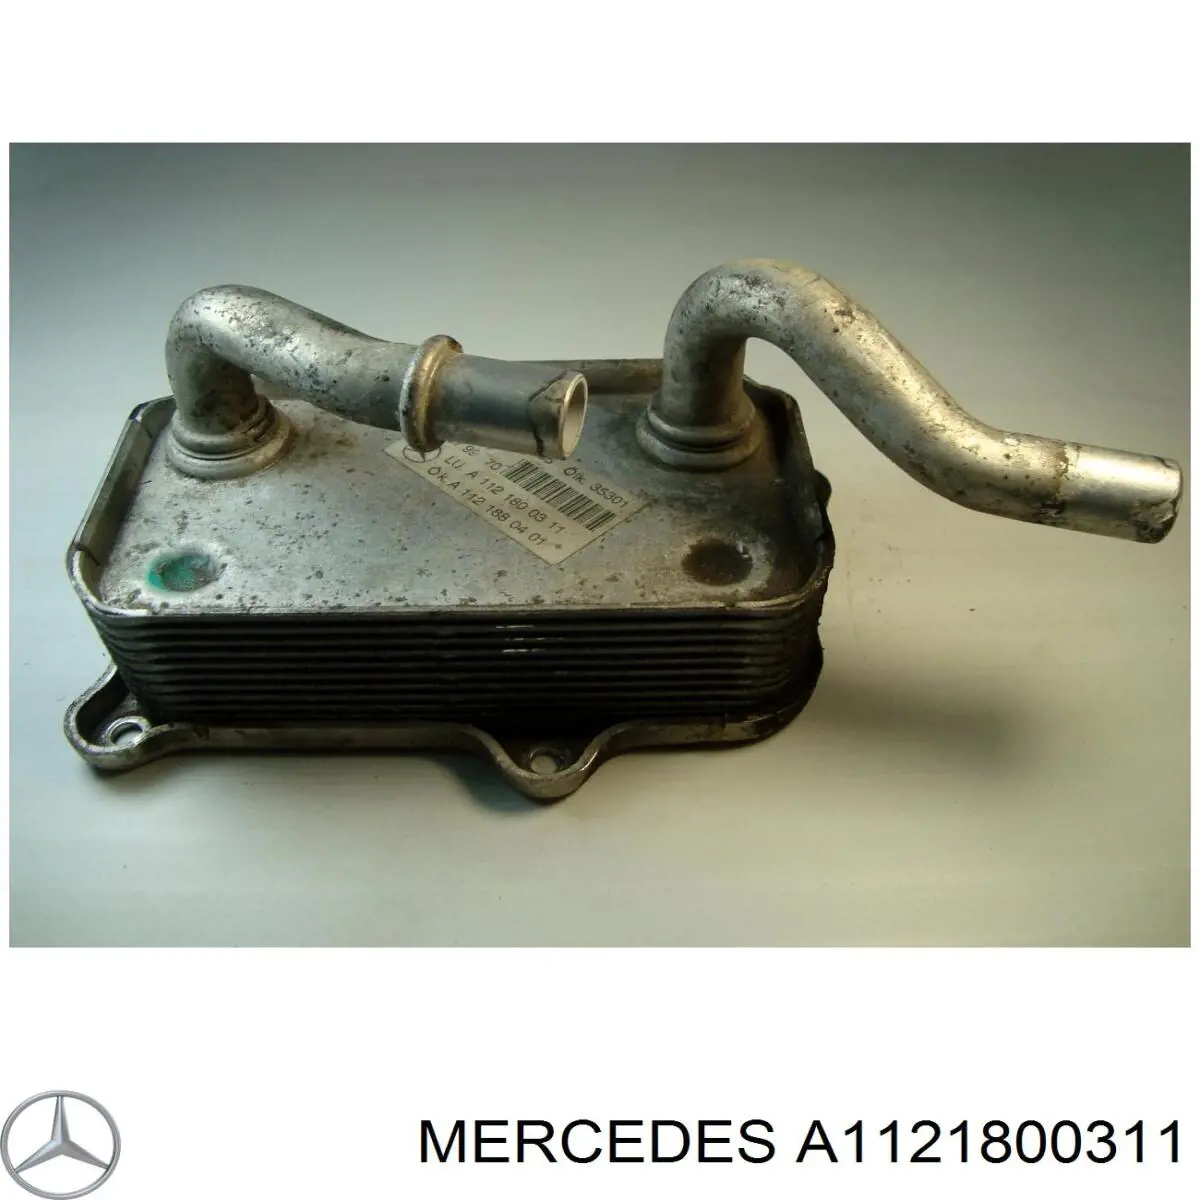 Радиатор масляный Mercedes A1121800311